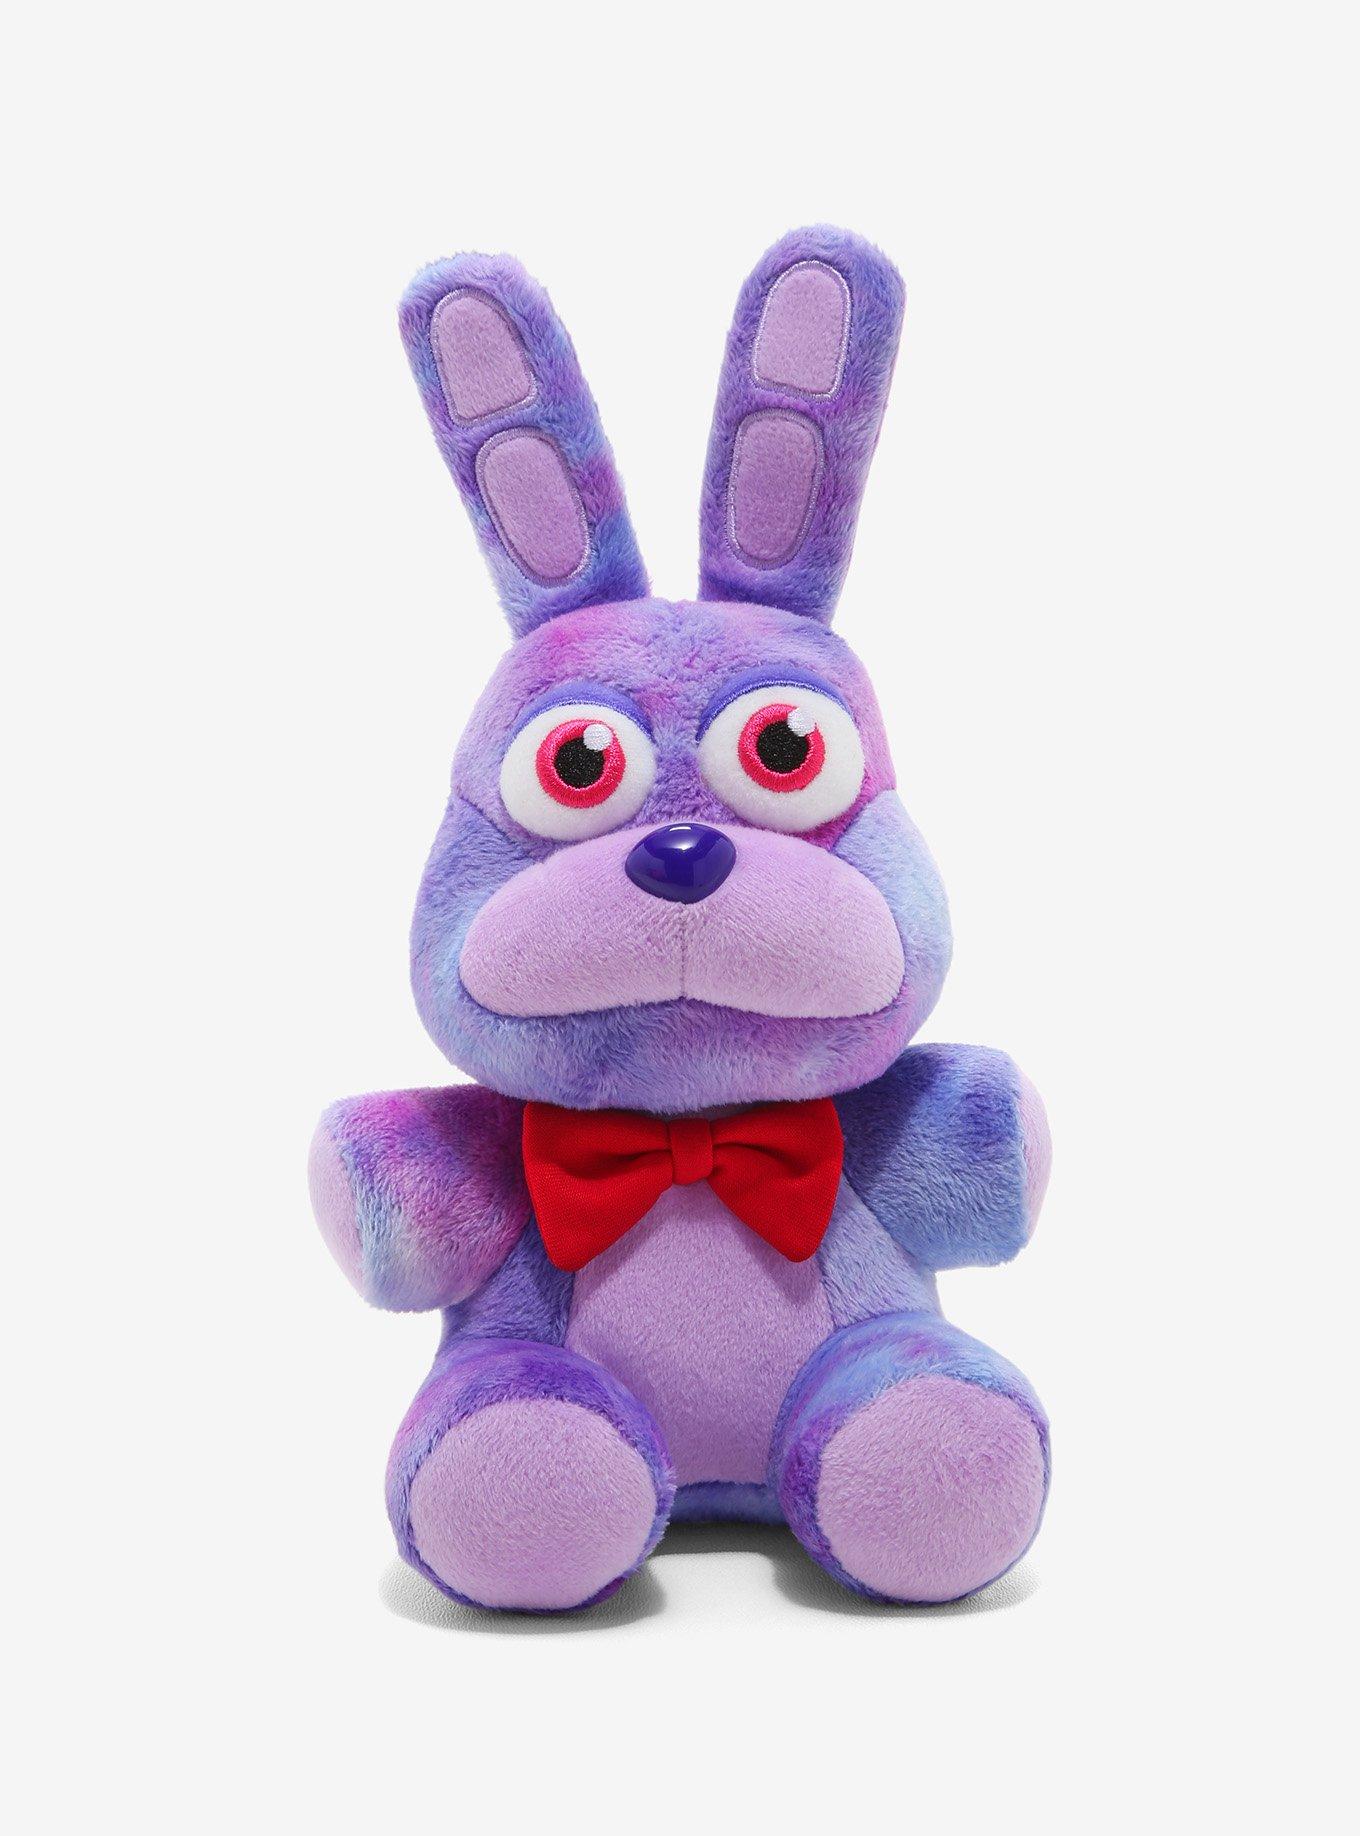 Fnaf Soft Toys Purple Guy, Fnaf Nightmare Stuffed